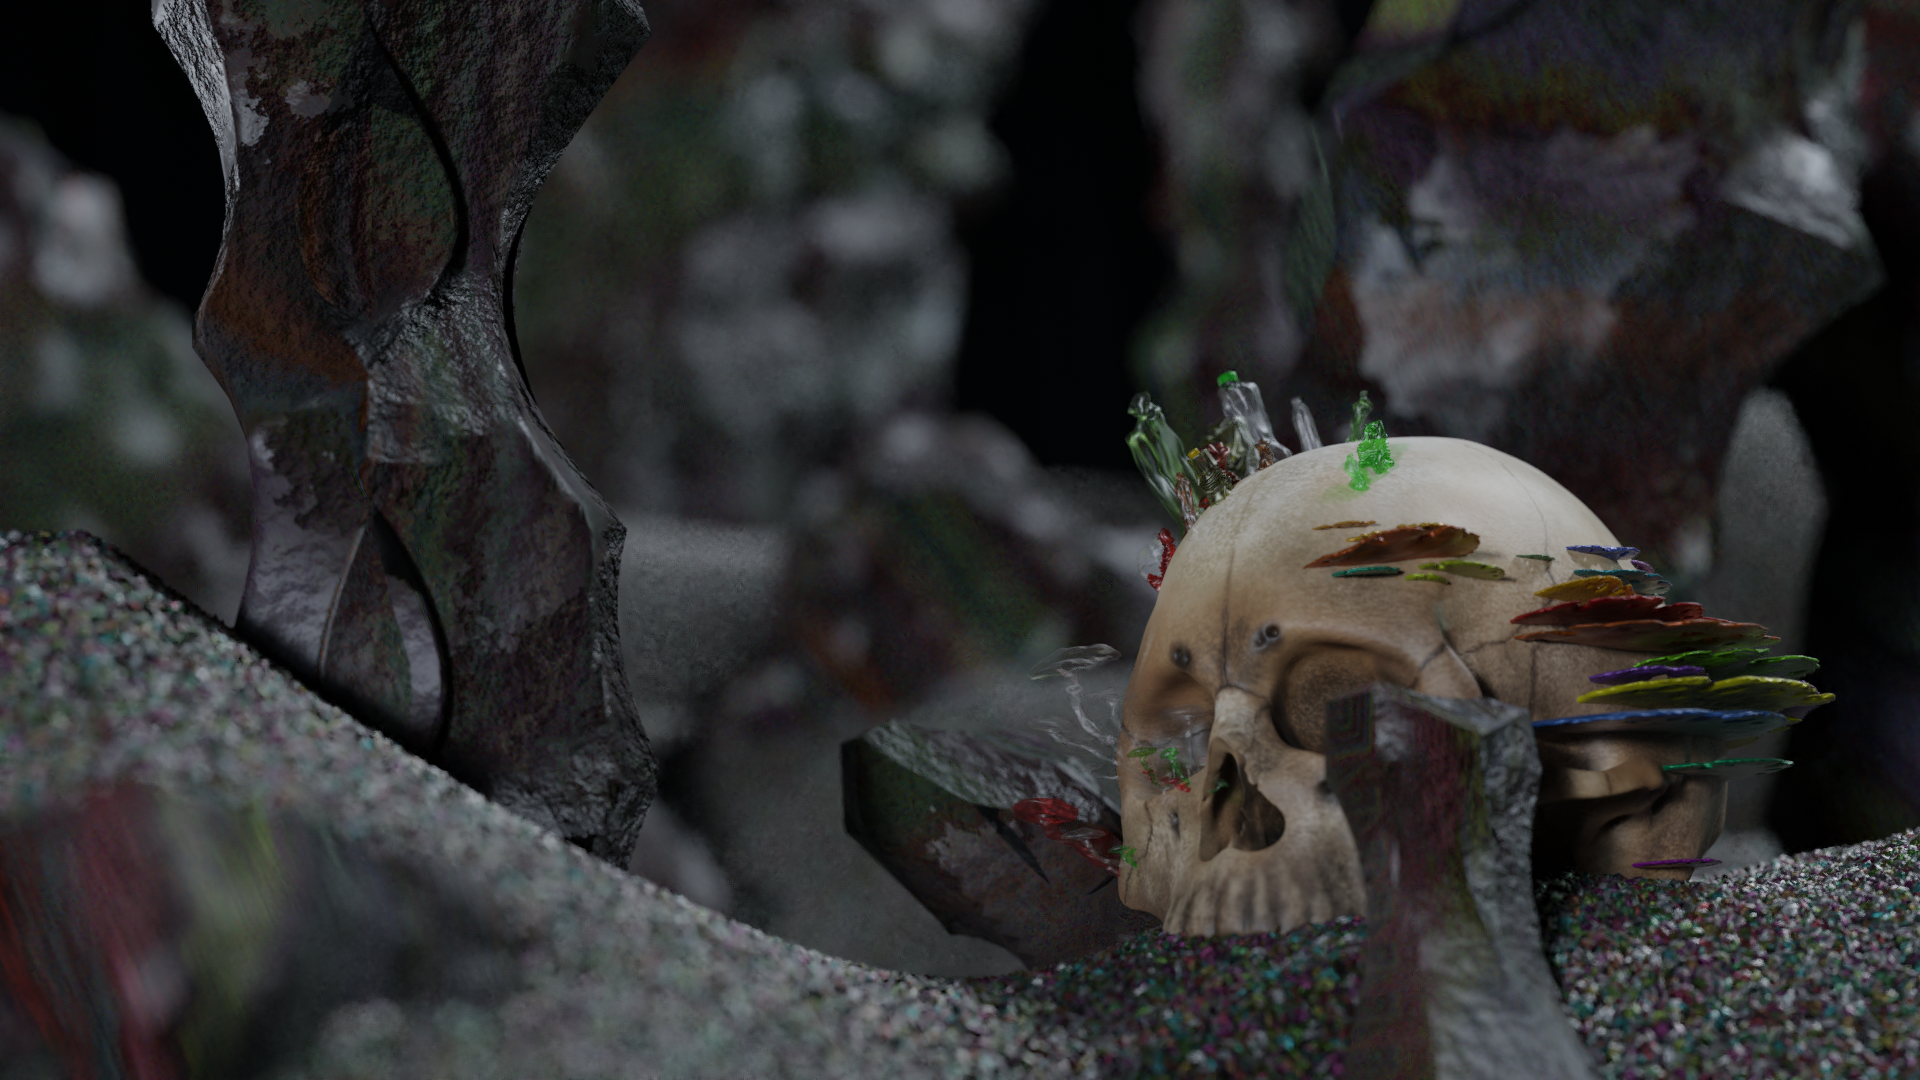 Mushrooms and Skulls s21